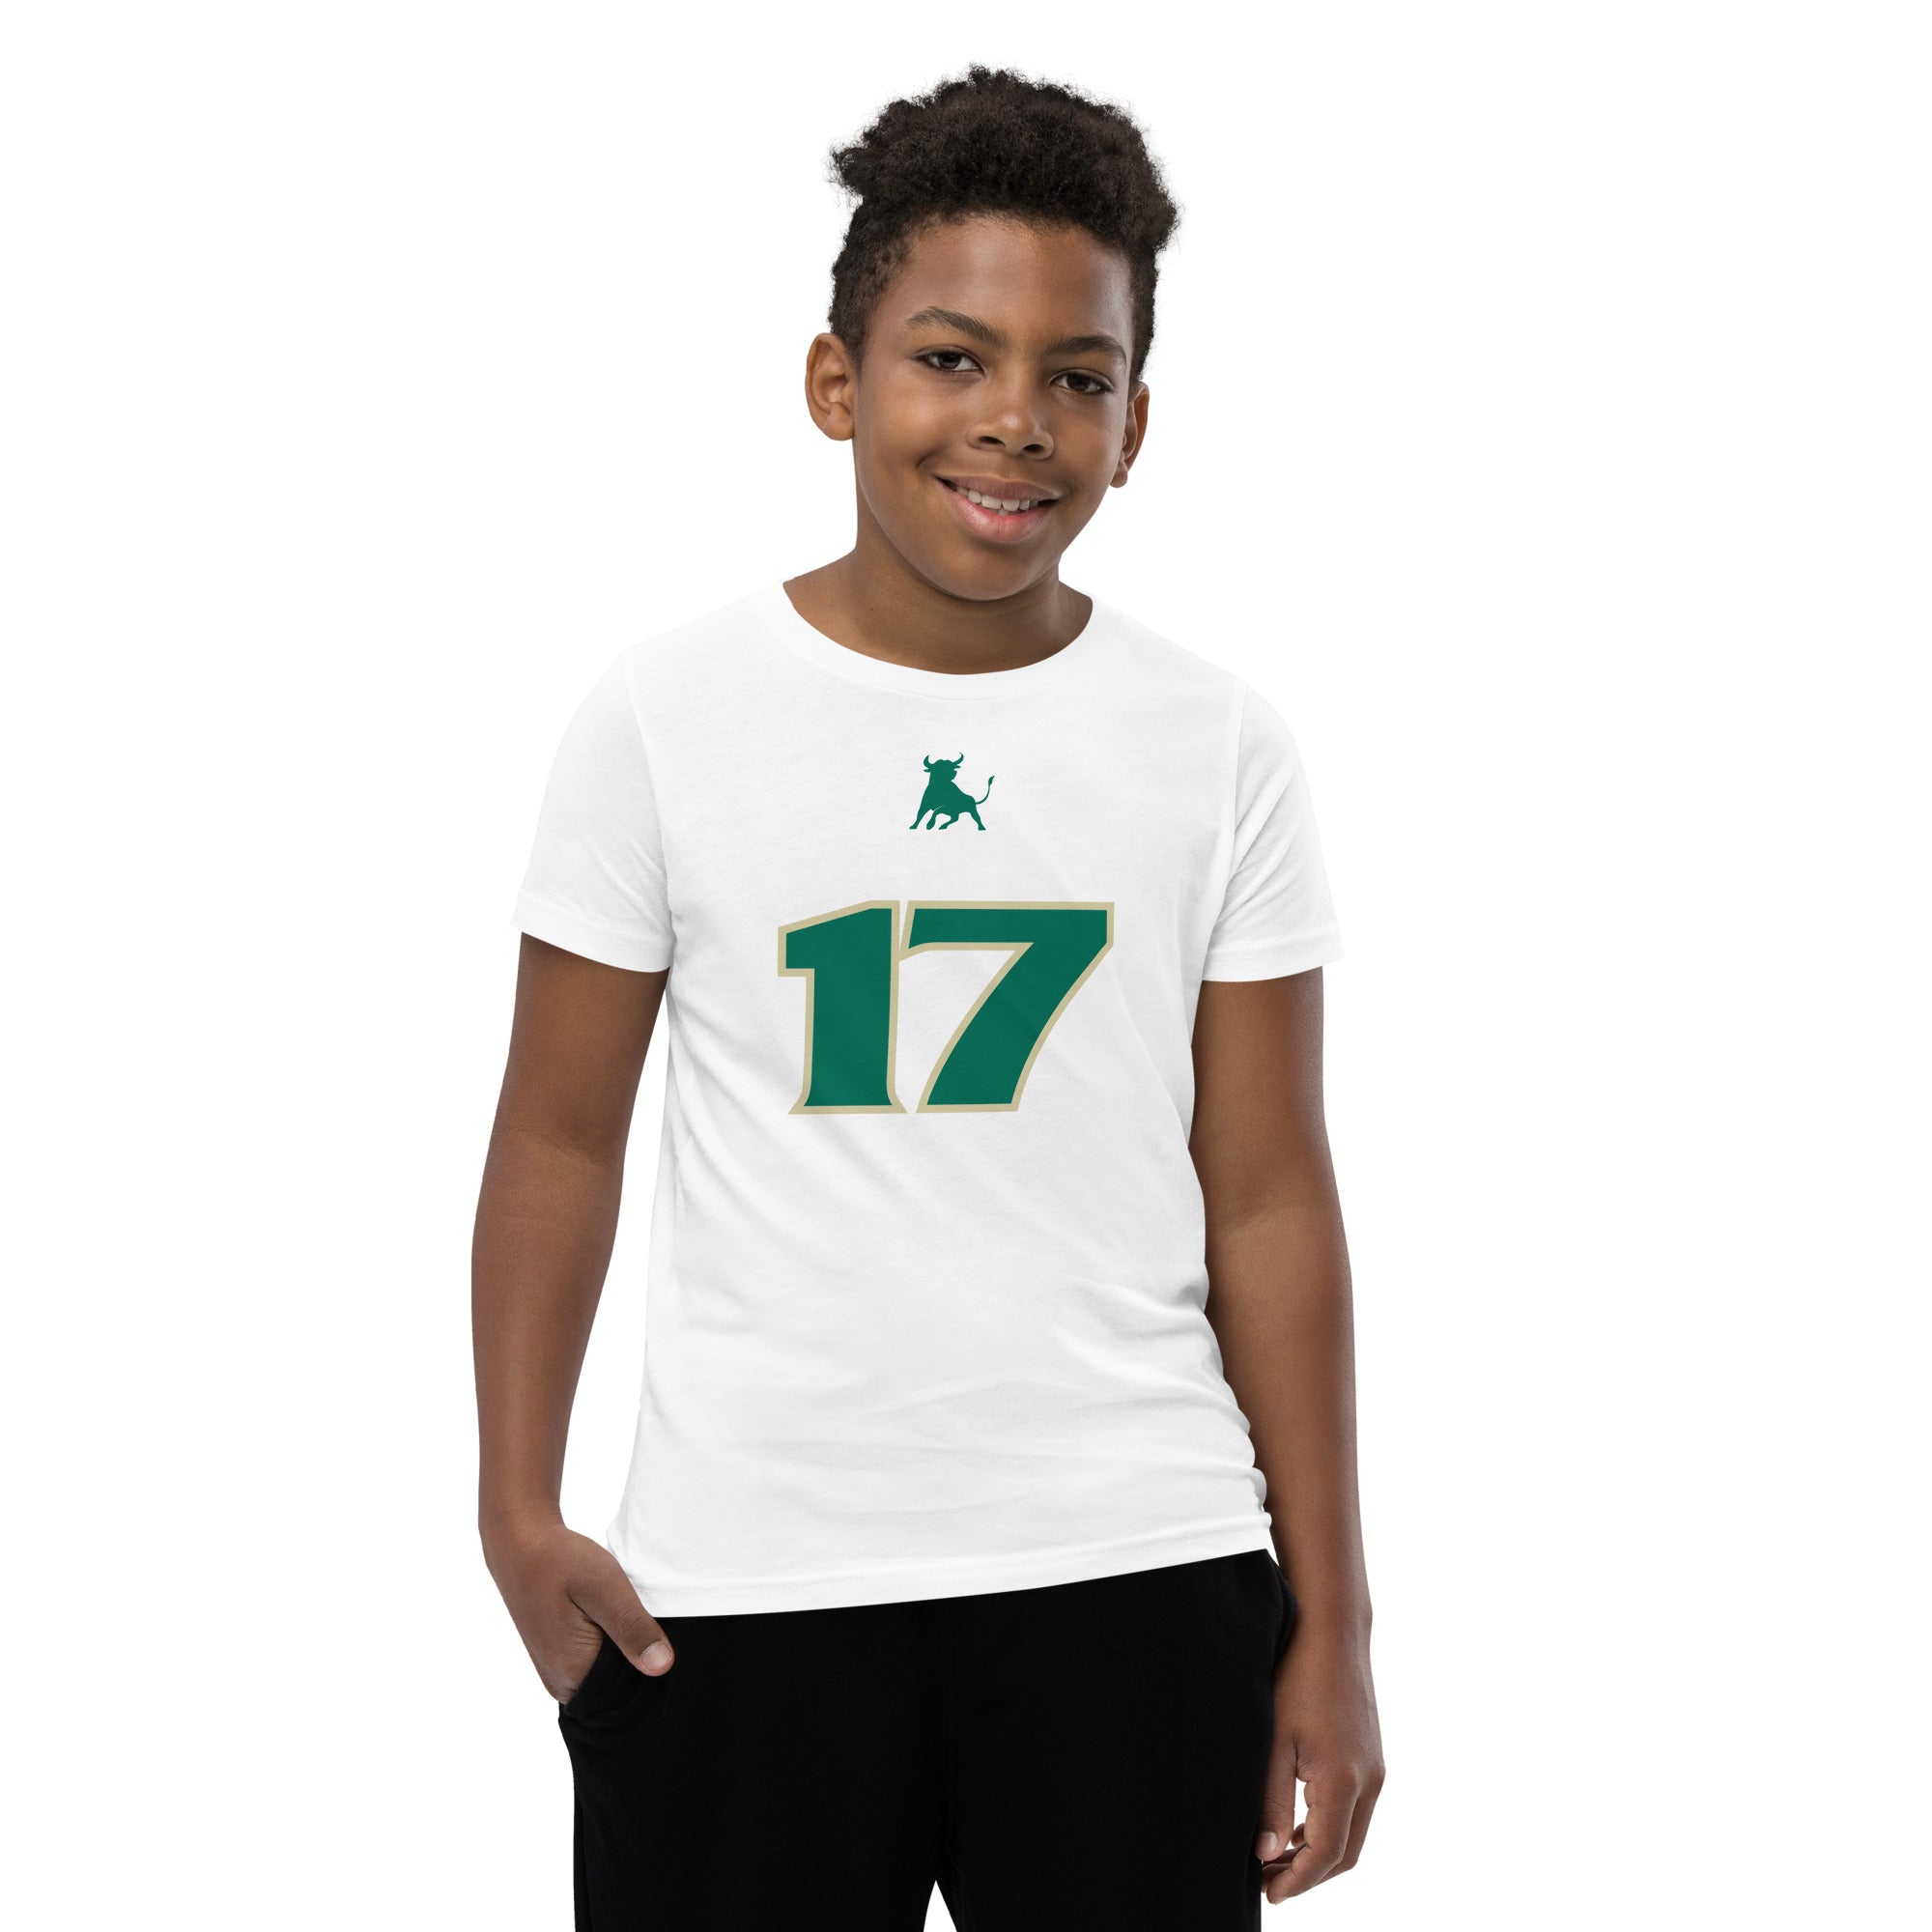 #17 Jhayln Shuler - Youth Jersey Shirt